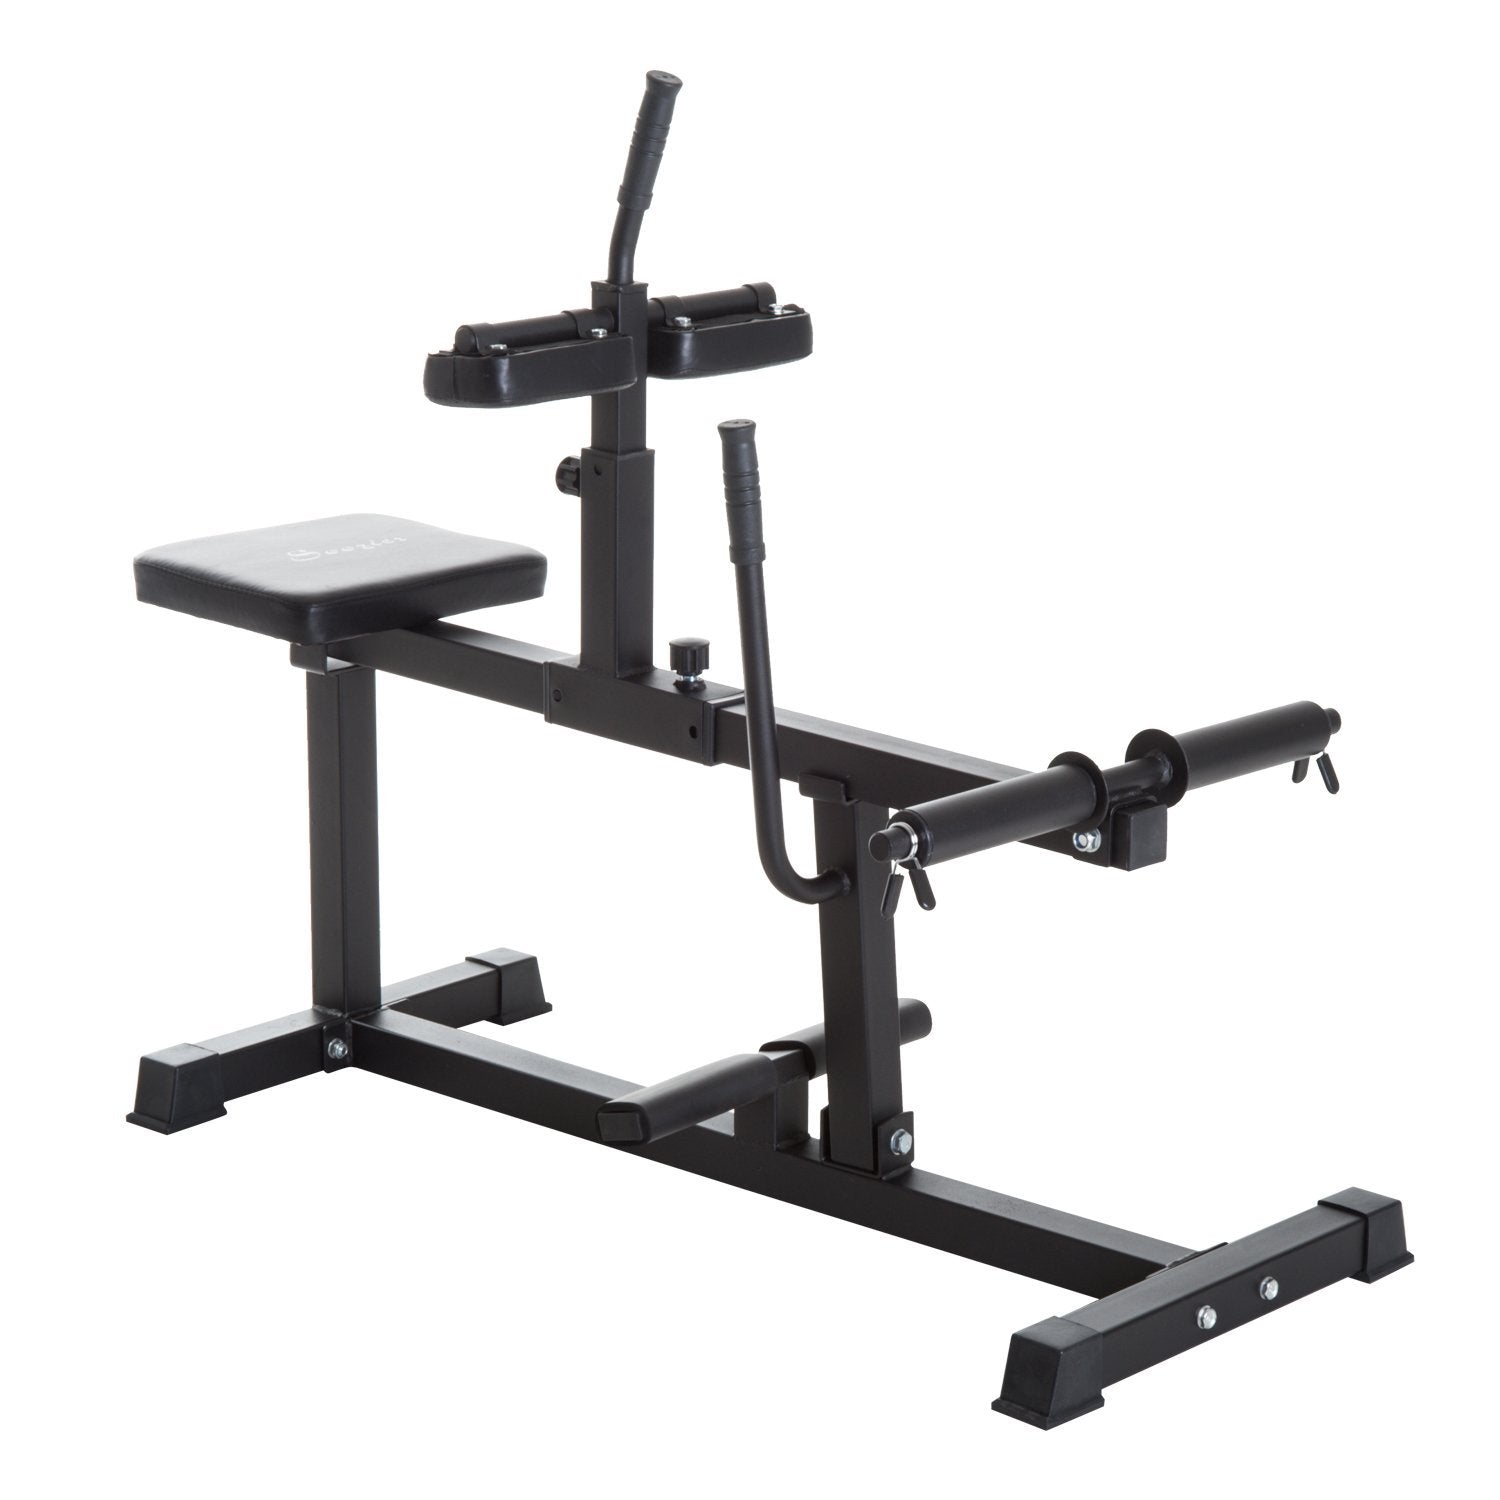 Adjustable Seated Calf Raise Machine, Steel Leg Press Machine, Strength Training Gym Equipment for Legs, Waist And Arms, Black - Gallery Canada